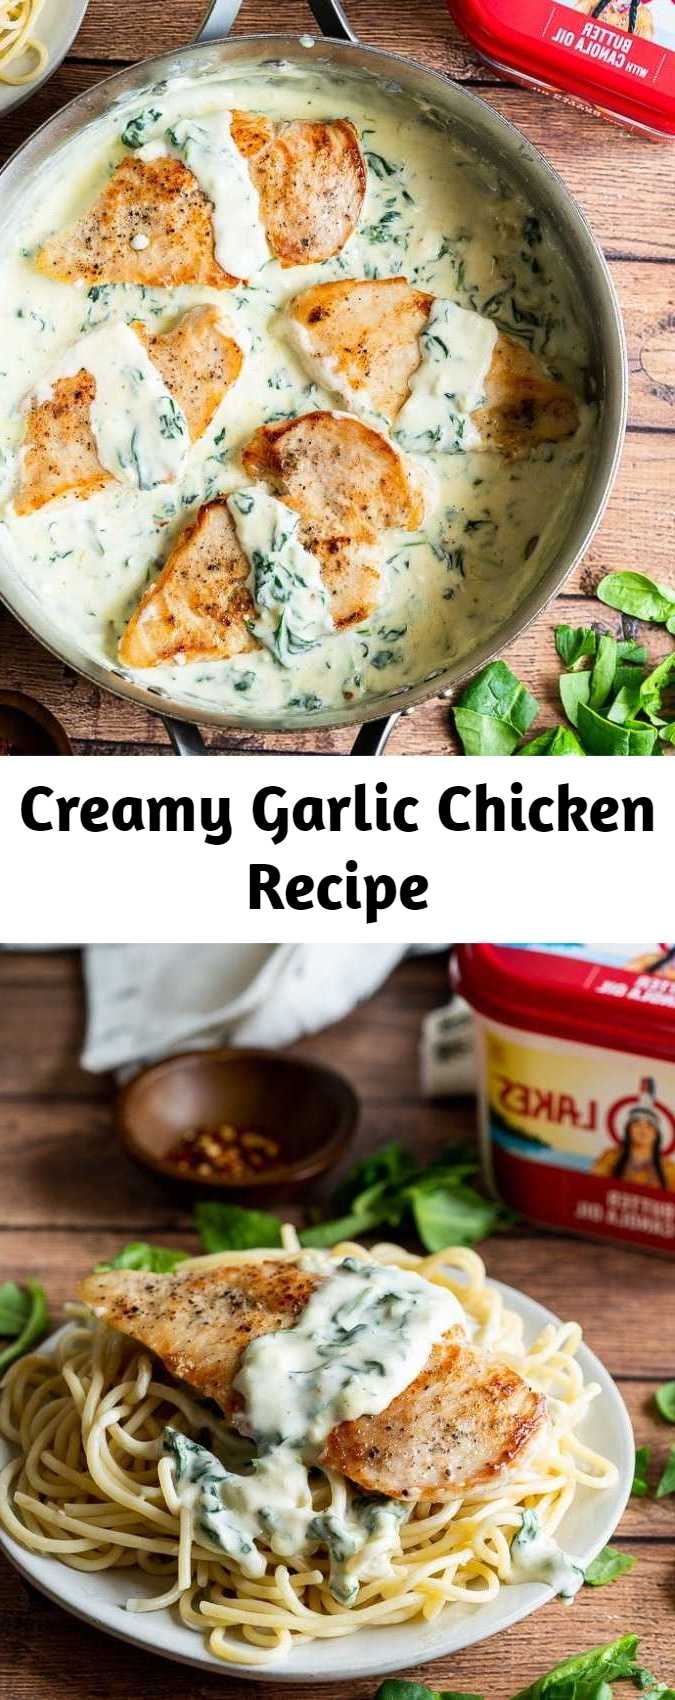 Creamy Garlic Chicken Recipe - This Creamy Garlic Chicken Recipe with spinach in a creamy parmesan cheese sauce is delicious over hot pasta.